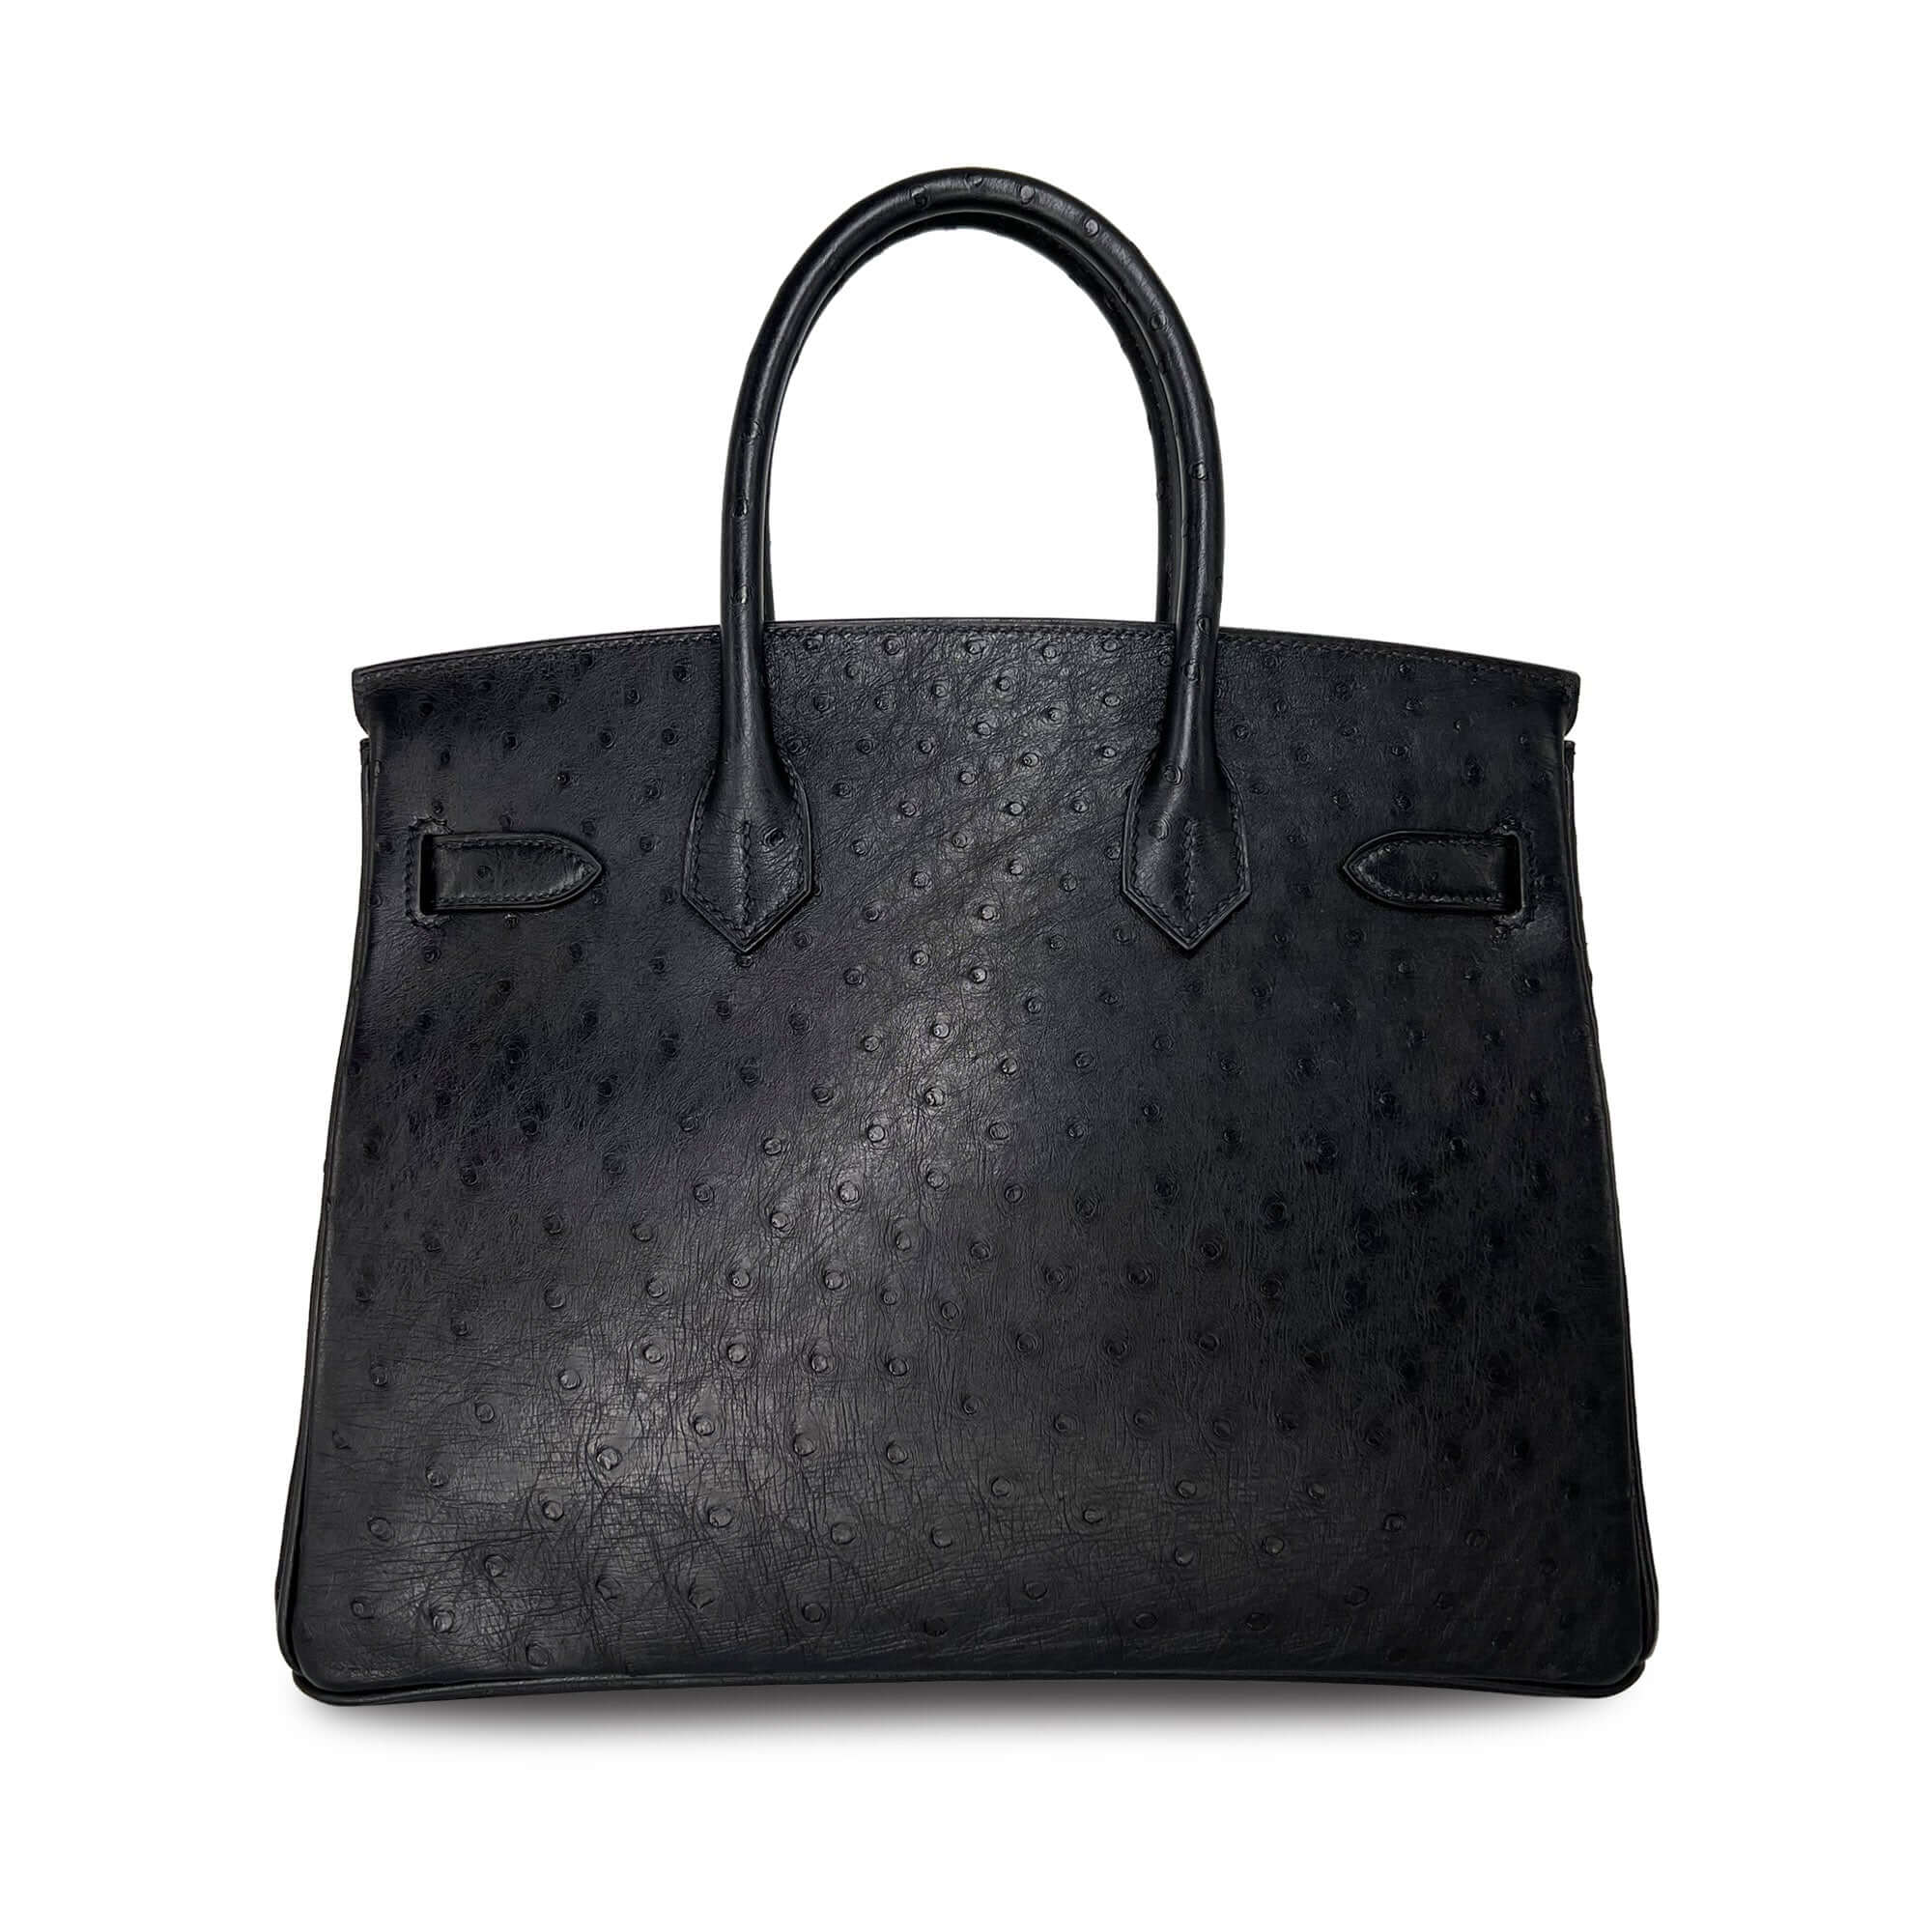 Top Quality Hermes Birkin Noir Designer Bag B30 RGHW